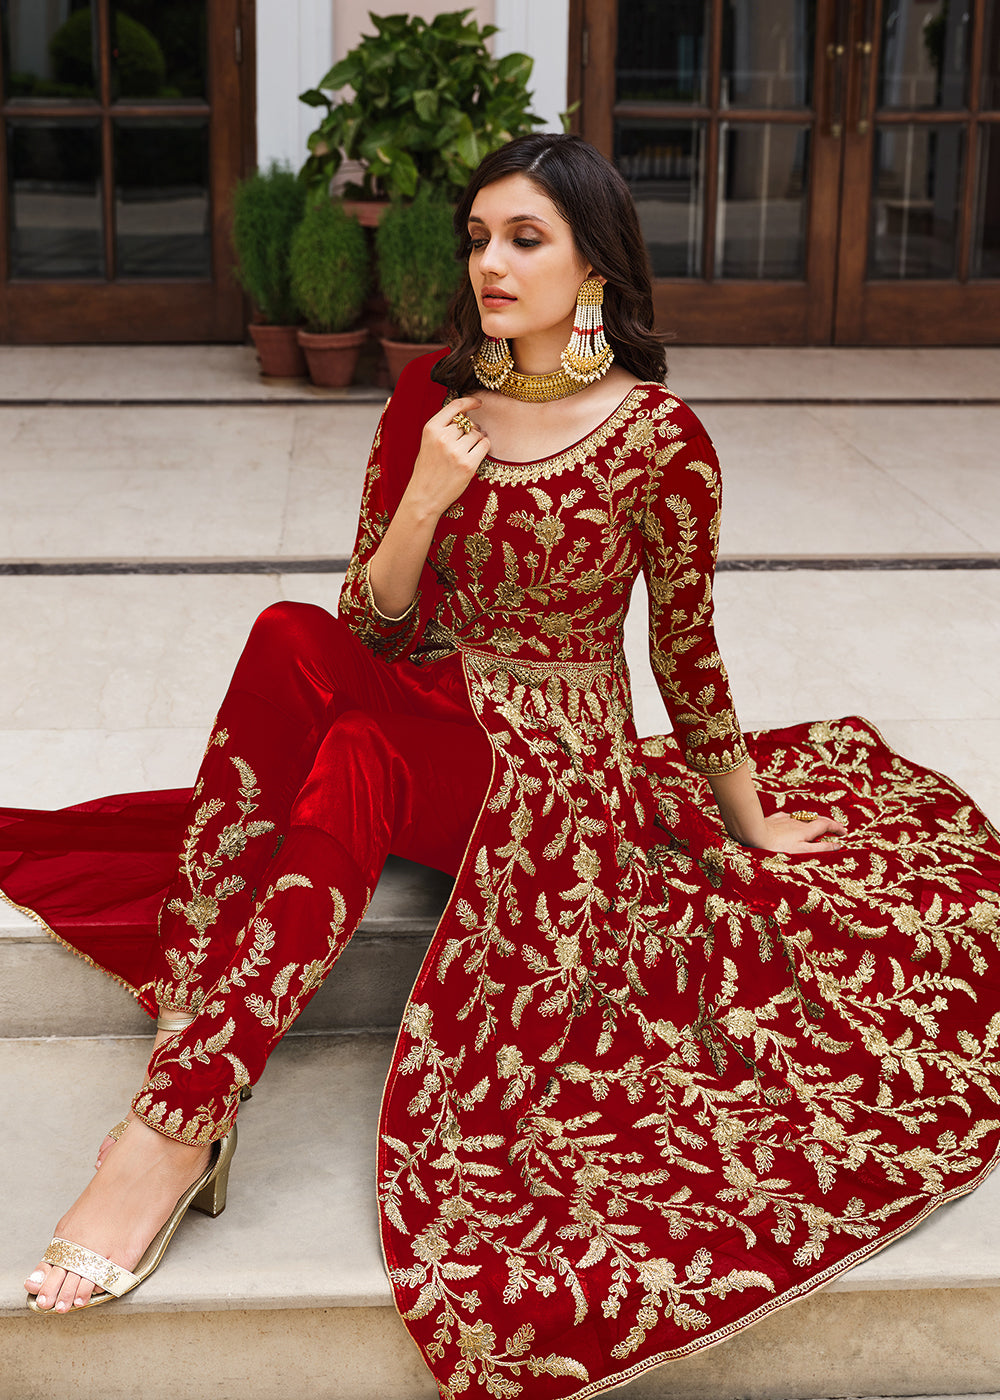 Buy Now Lovely Bright Red Designer Front Slit Anarkali Dress Online in USA, UK, Australia, New Zealand, Canada & Worldwide at Empress Clothing.